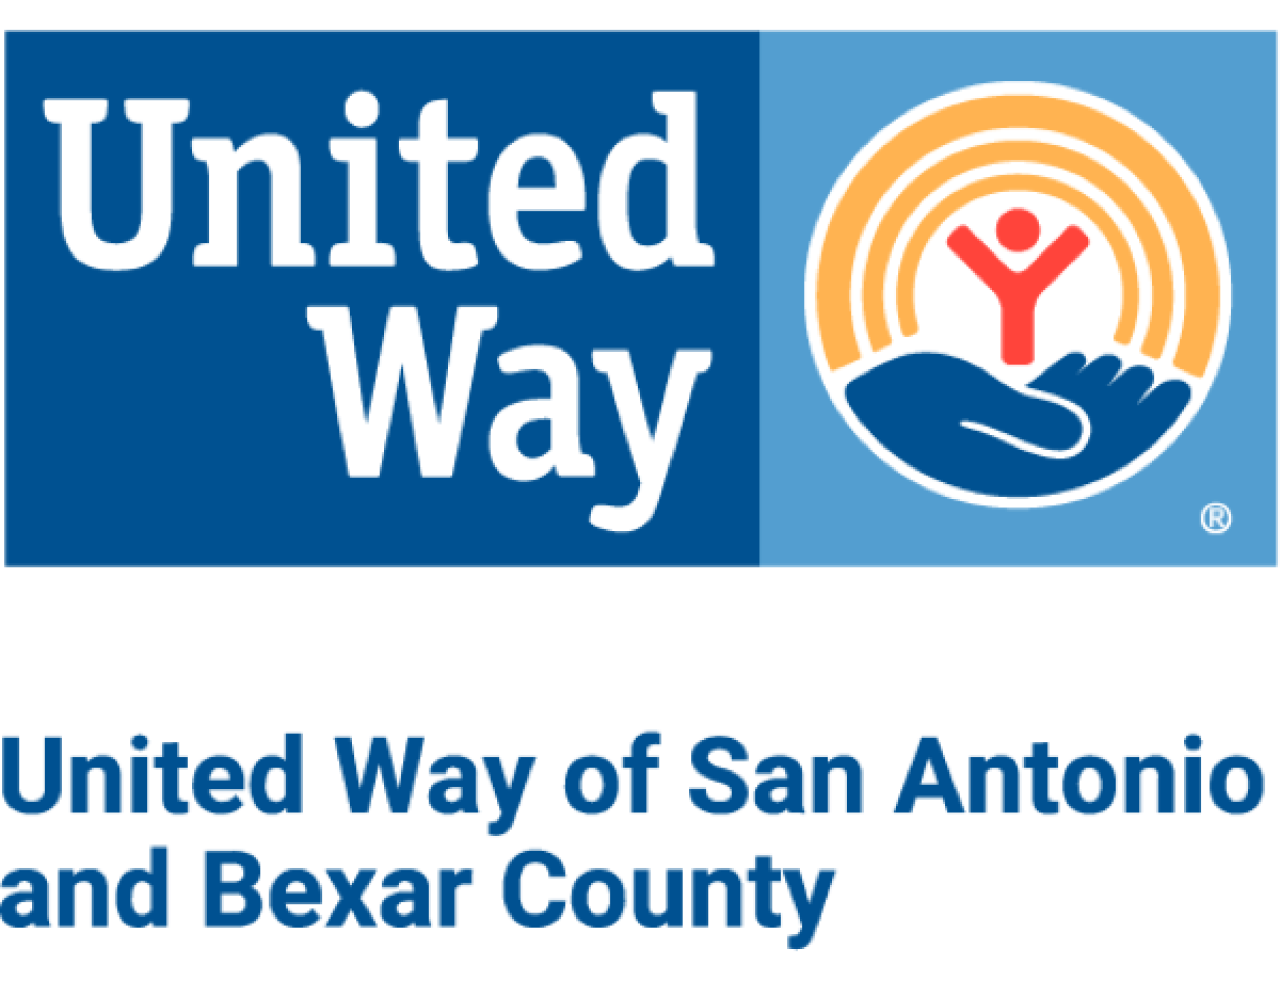 united way of san antonio logo.